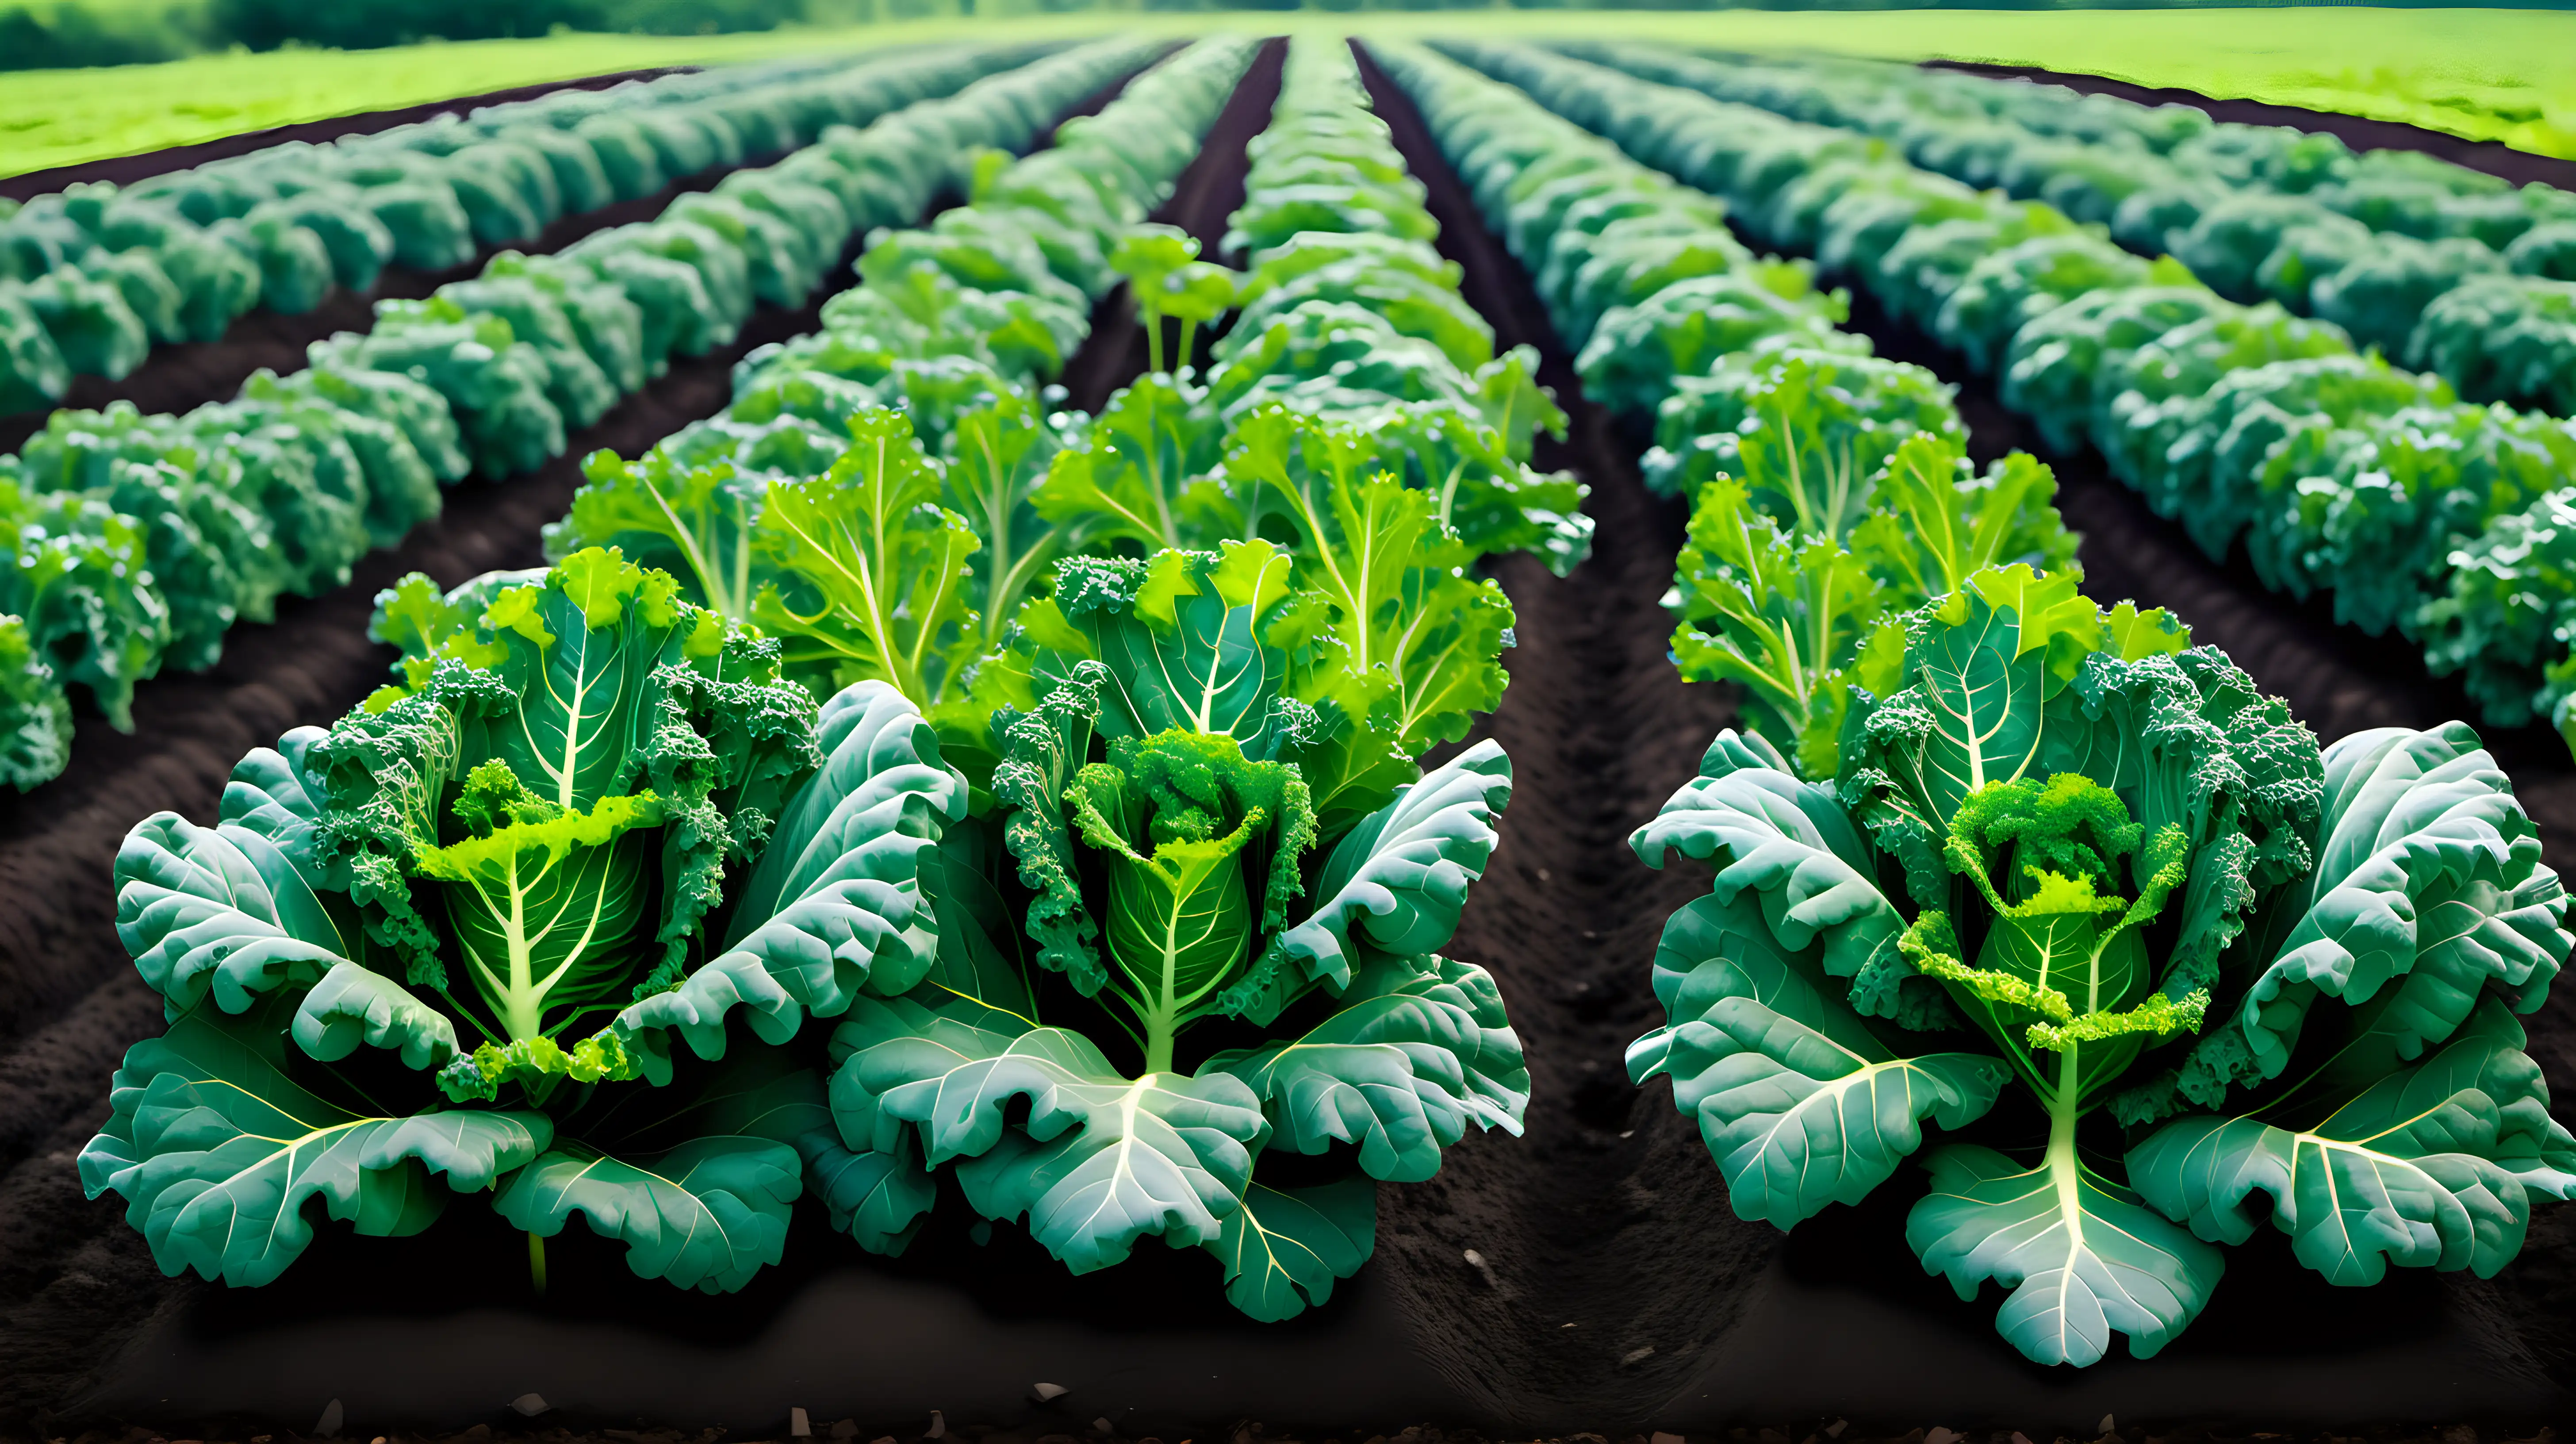 kale vegetable field, plants in soil, green world, vegetable farm